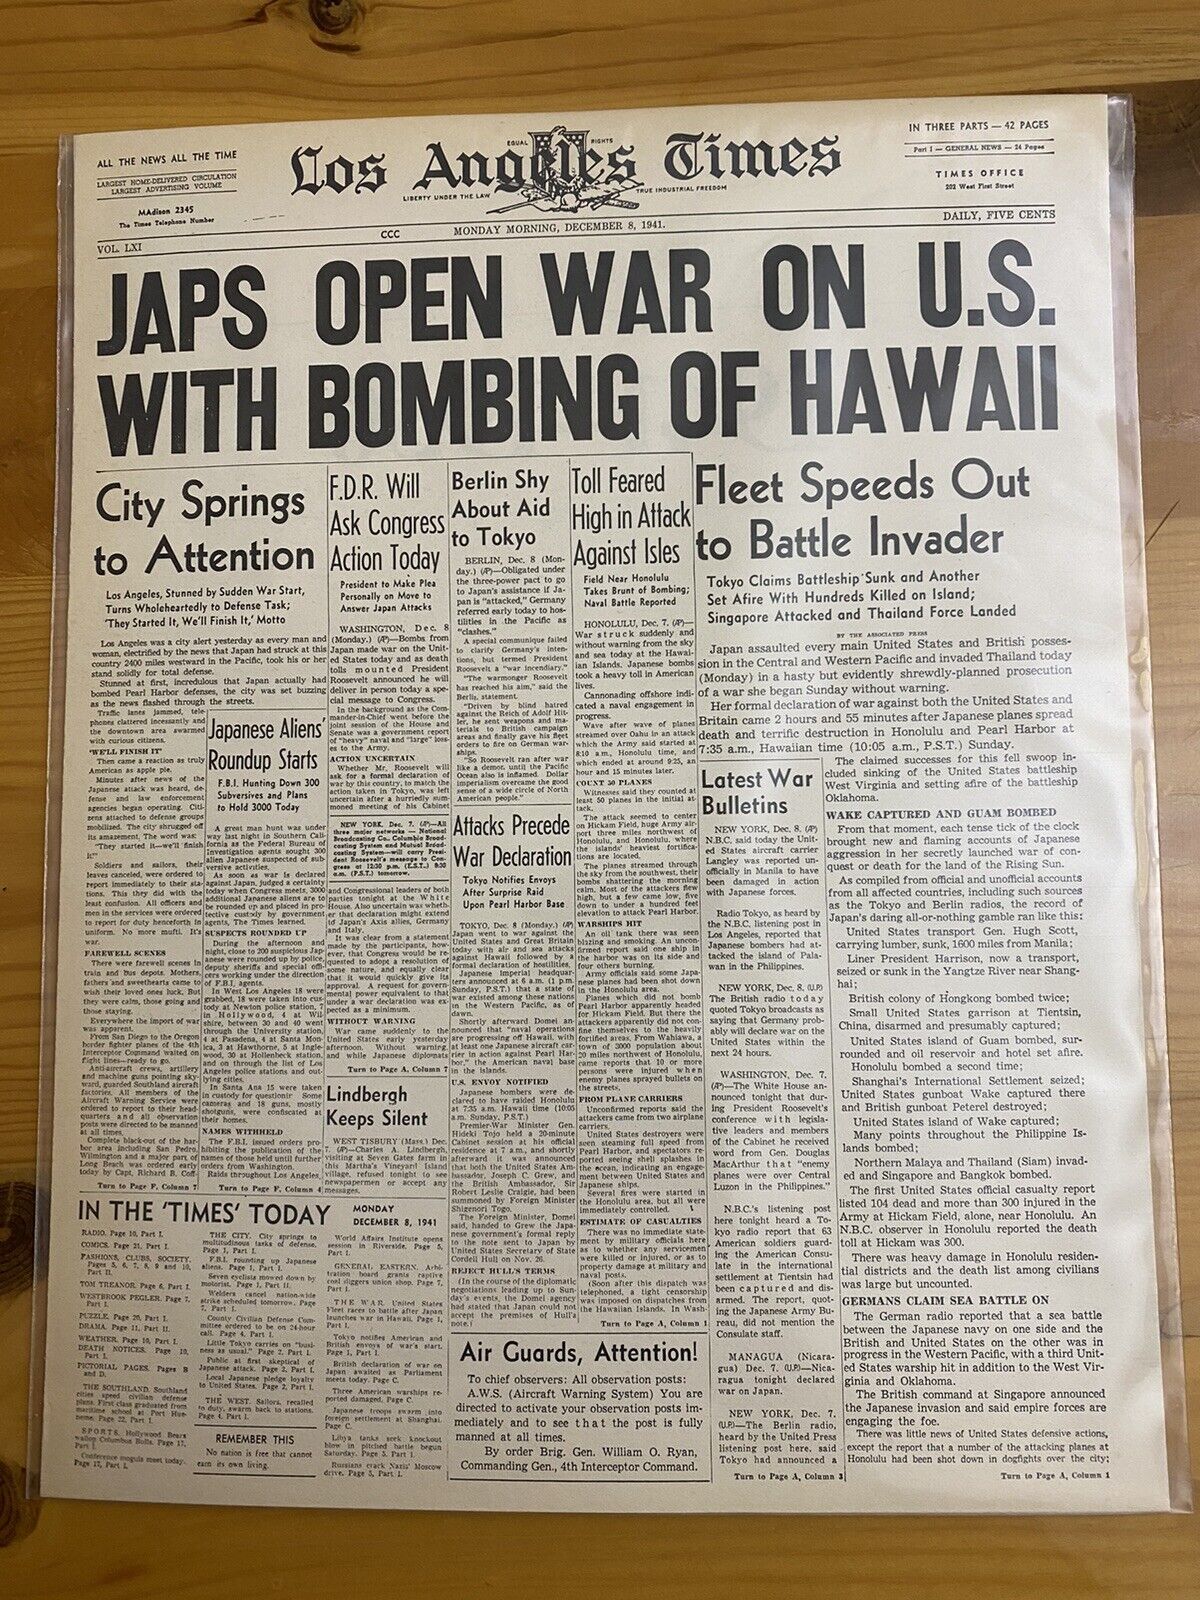 VINTAGE NEWSPAPER HEADLINE~JAPANESE PLANES BOMB PEARL HARBOR HAWAII WW2 1941 WAR